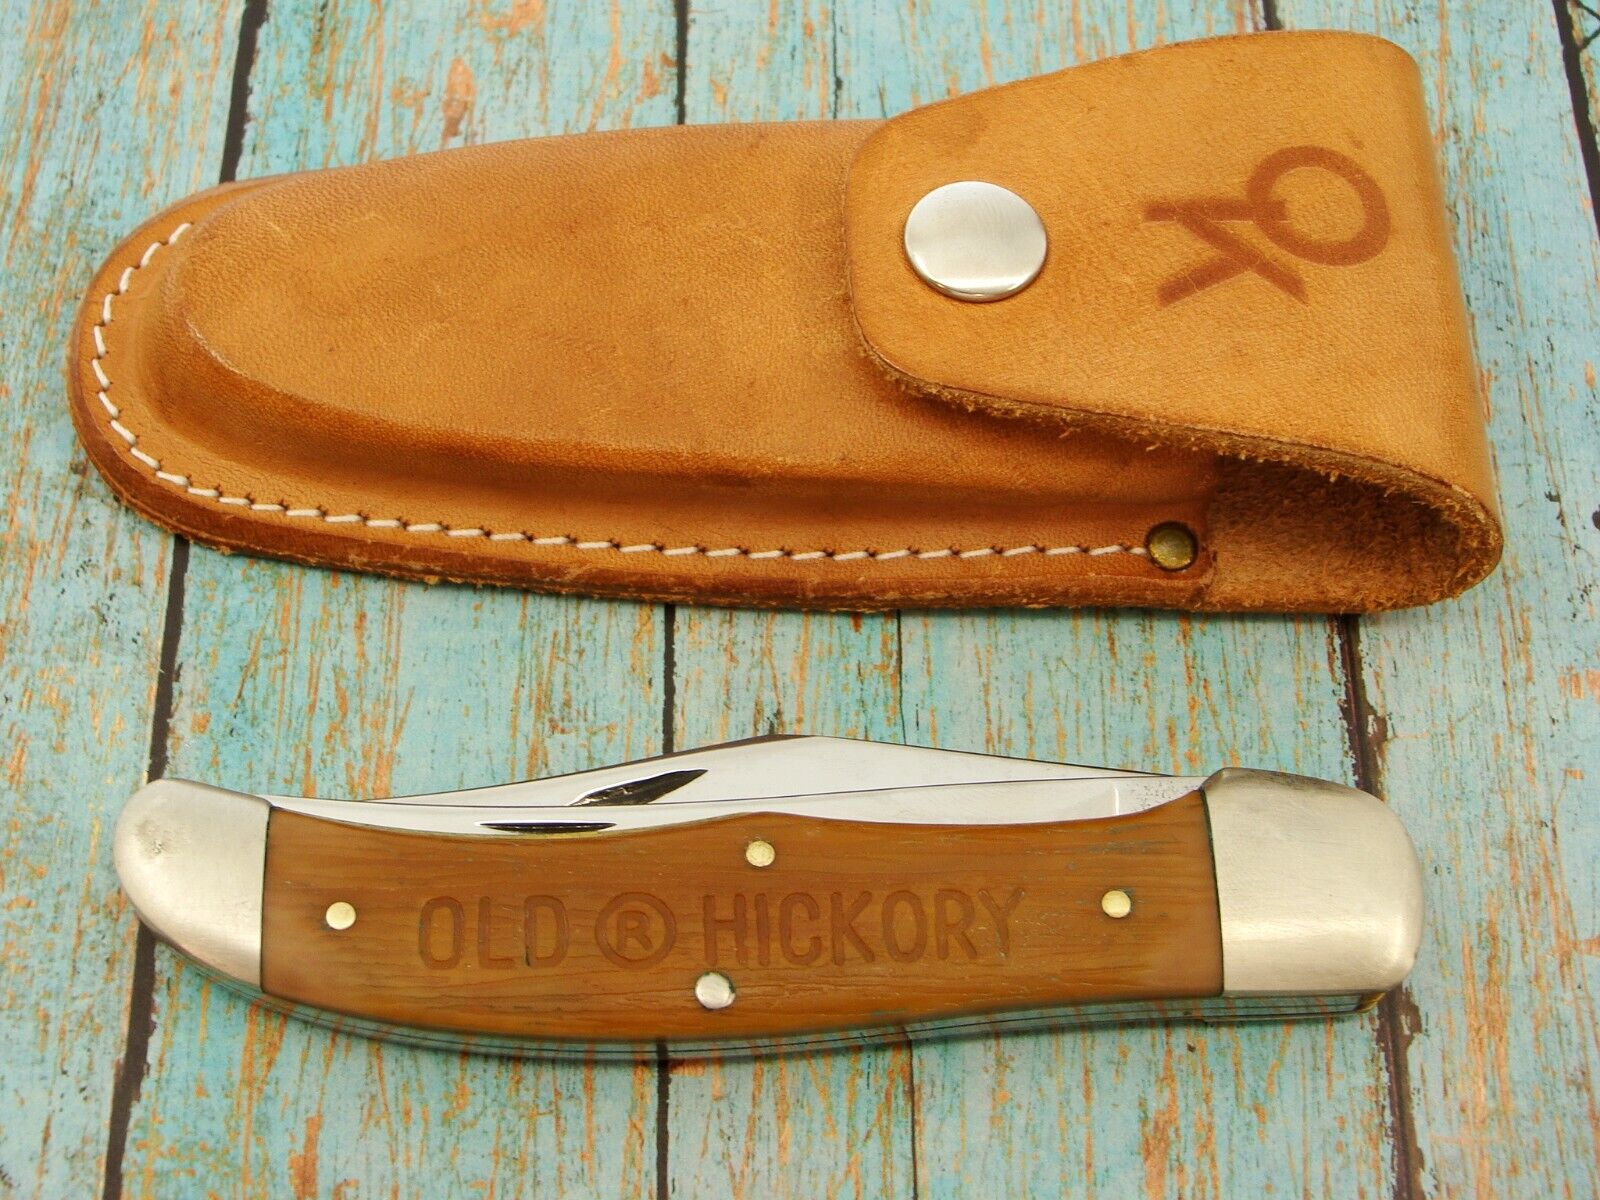 VINTAGE OK OLD HICKORY USA ONTARIO KNIFE 611 FOLDING HUNTER KNIFE &SHEATH KNIVES